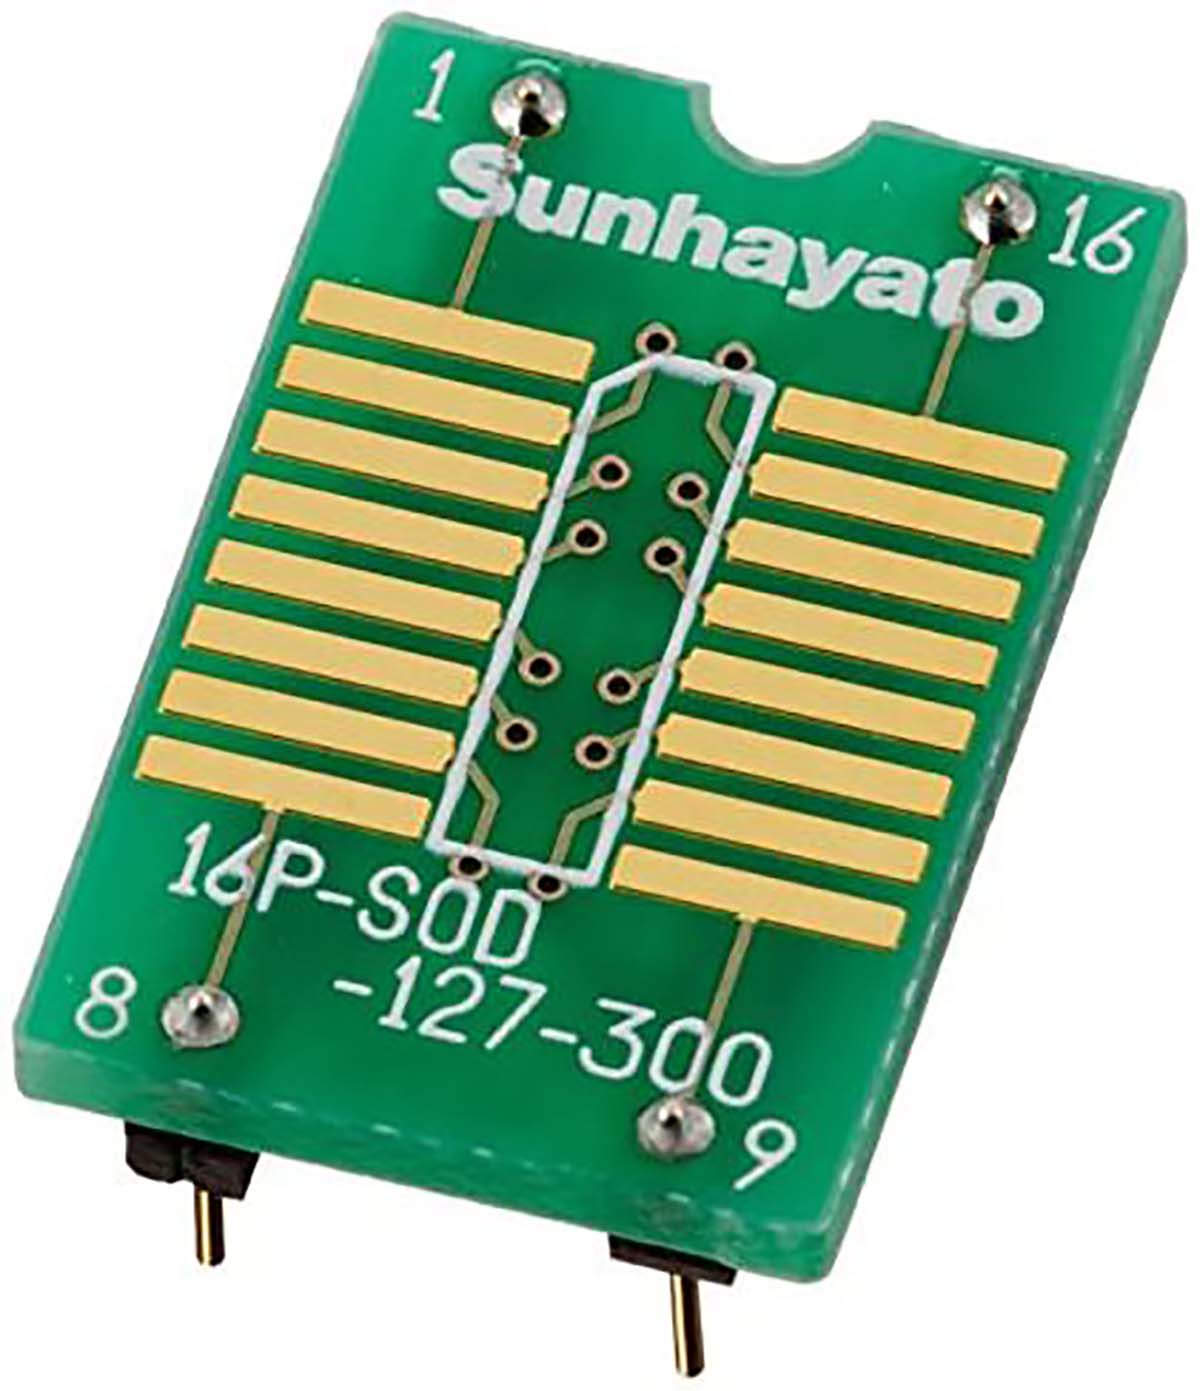 Sunhayato Straight Through Hole Mount IC Socket Adapter, 16 Pin Female SOP to 16 Pin Female DIP